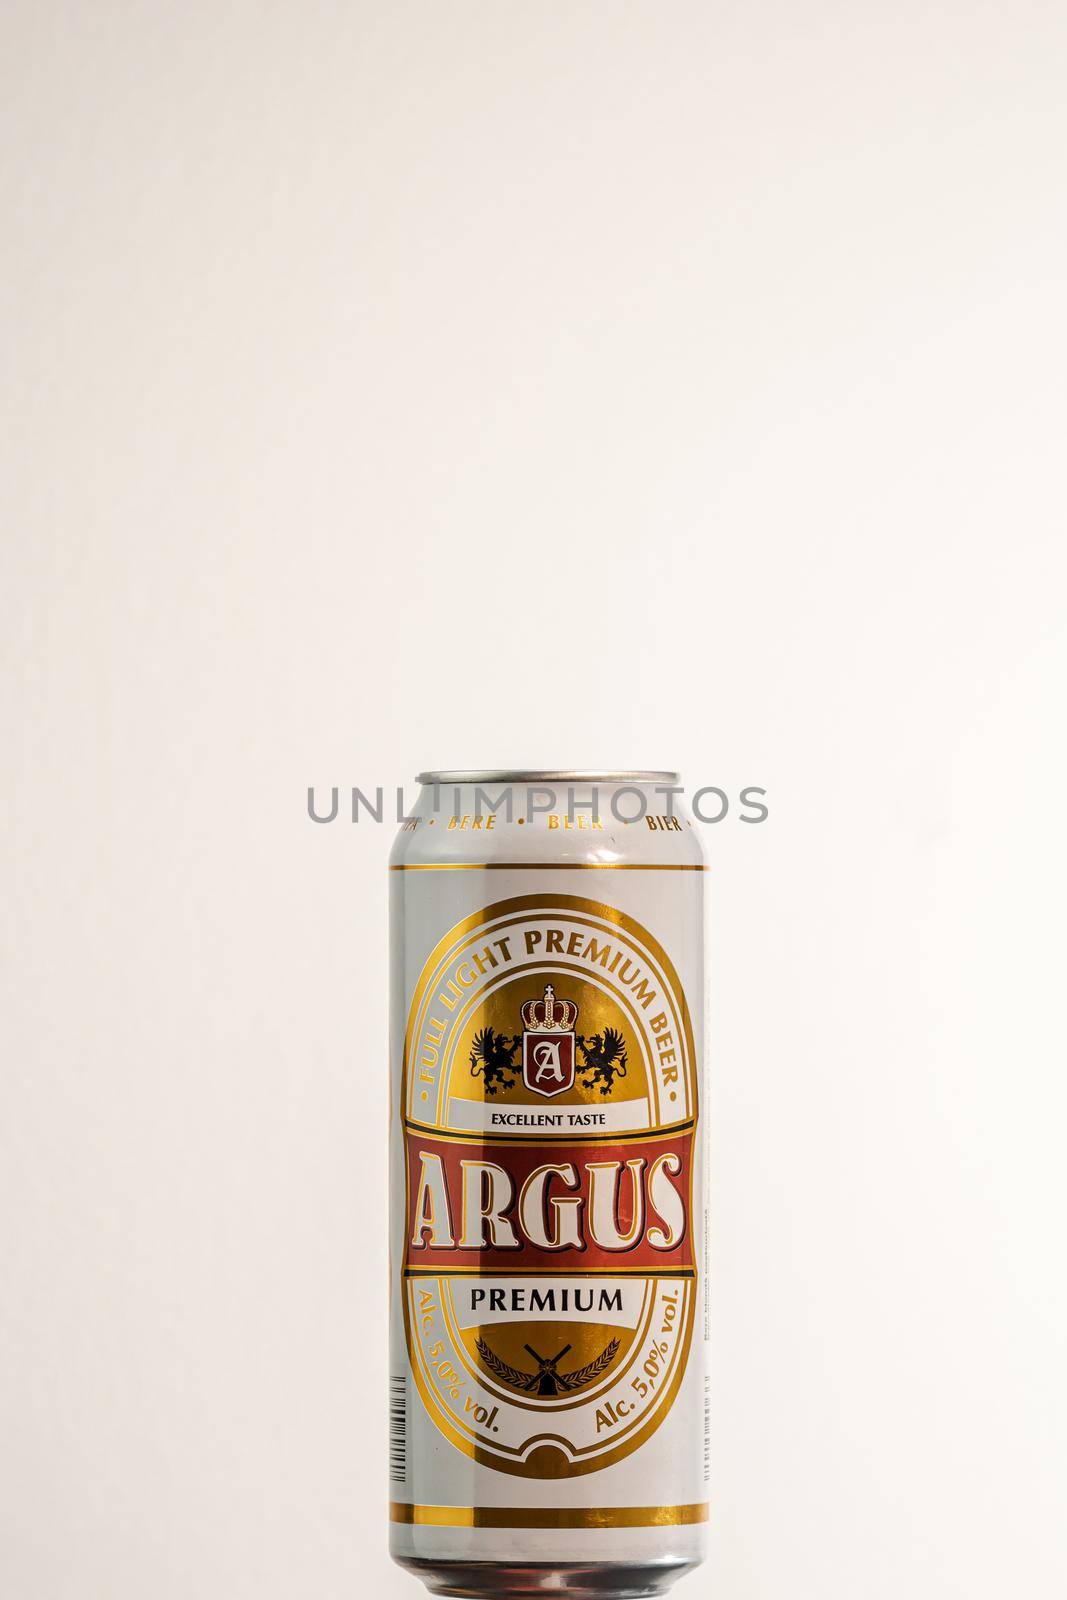 Argus Premium Lager beer. Lild supermarket own brand beer. Studio photo shoot in Bucharest, Romania, 2020 by vladispas